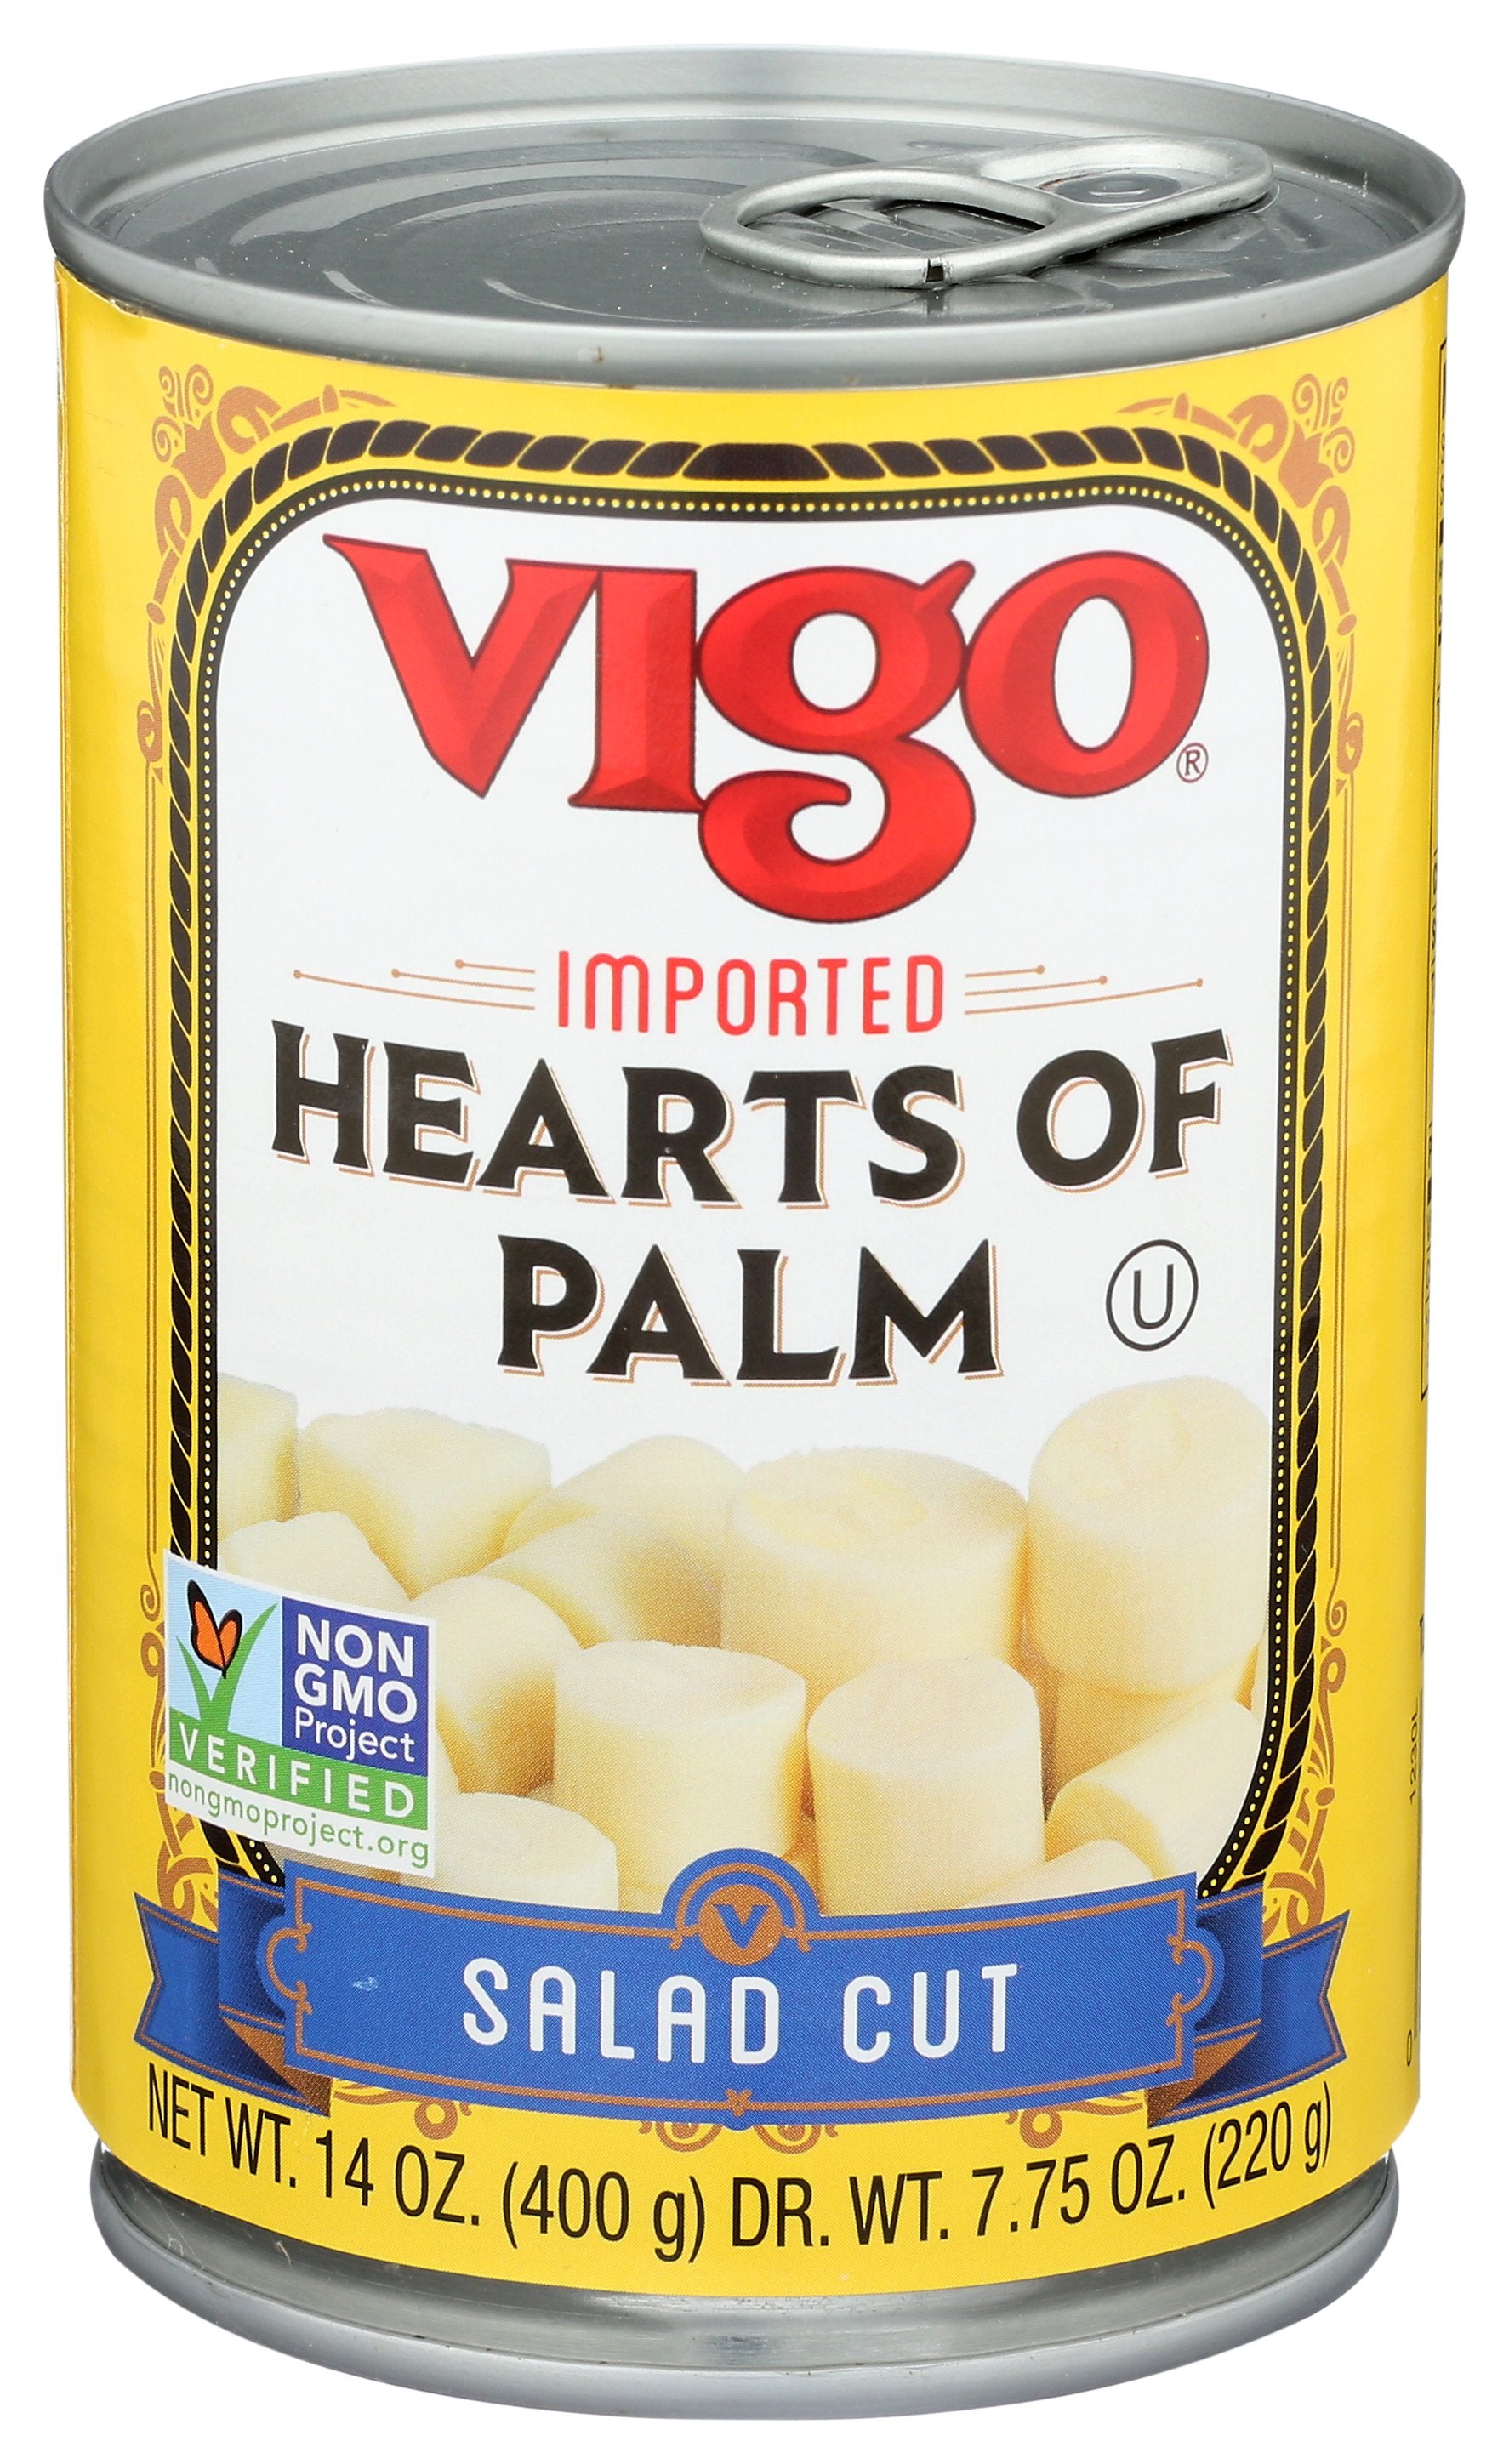 VIGO PALM HEART SALAD CUT - Case of 12